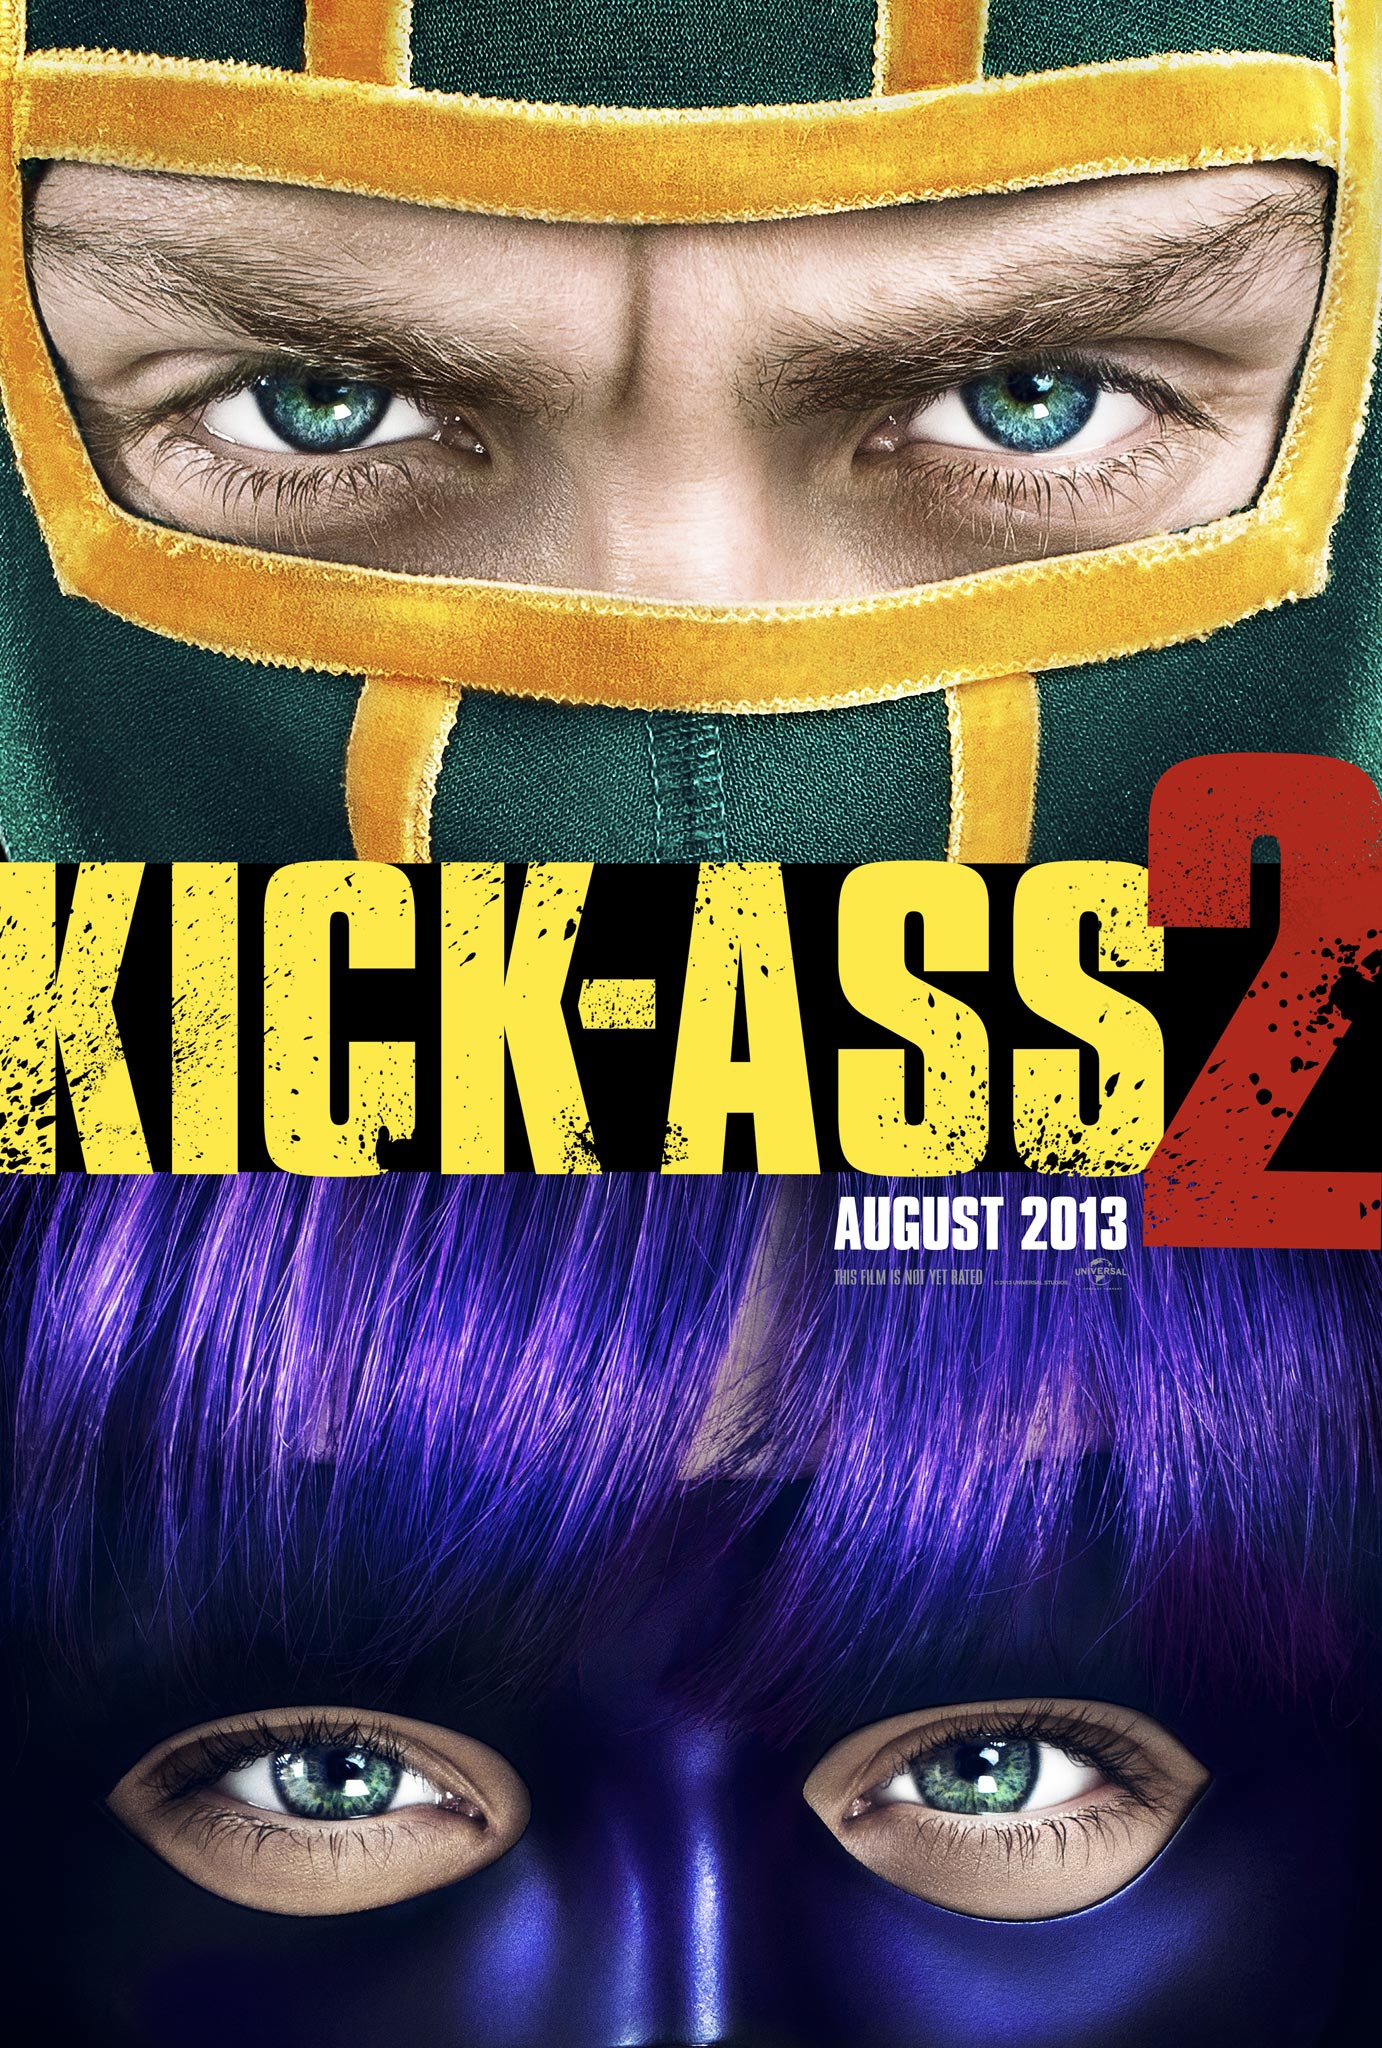 Kick-Ass 2 - Movie Poster #1 (Original)